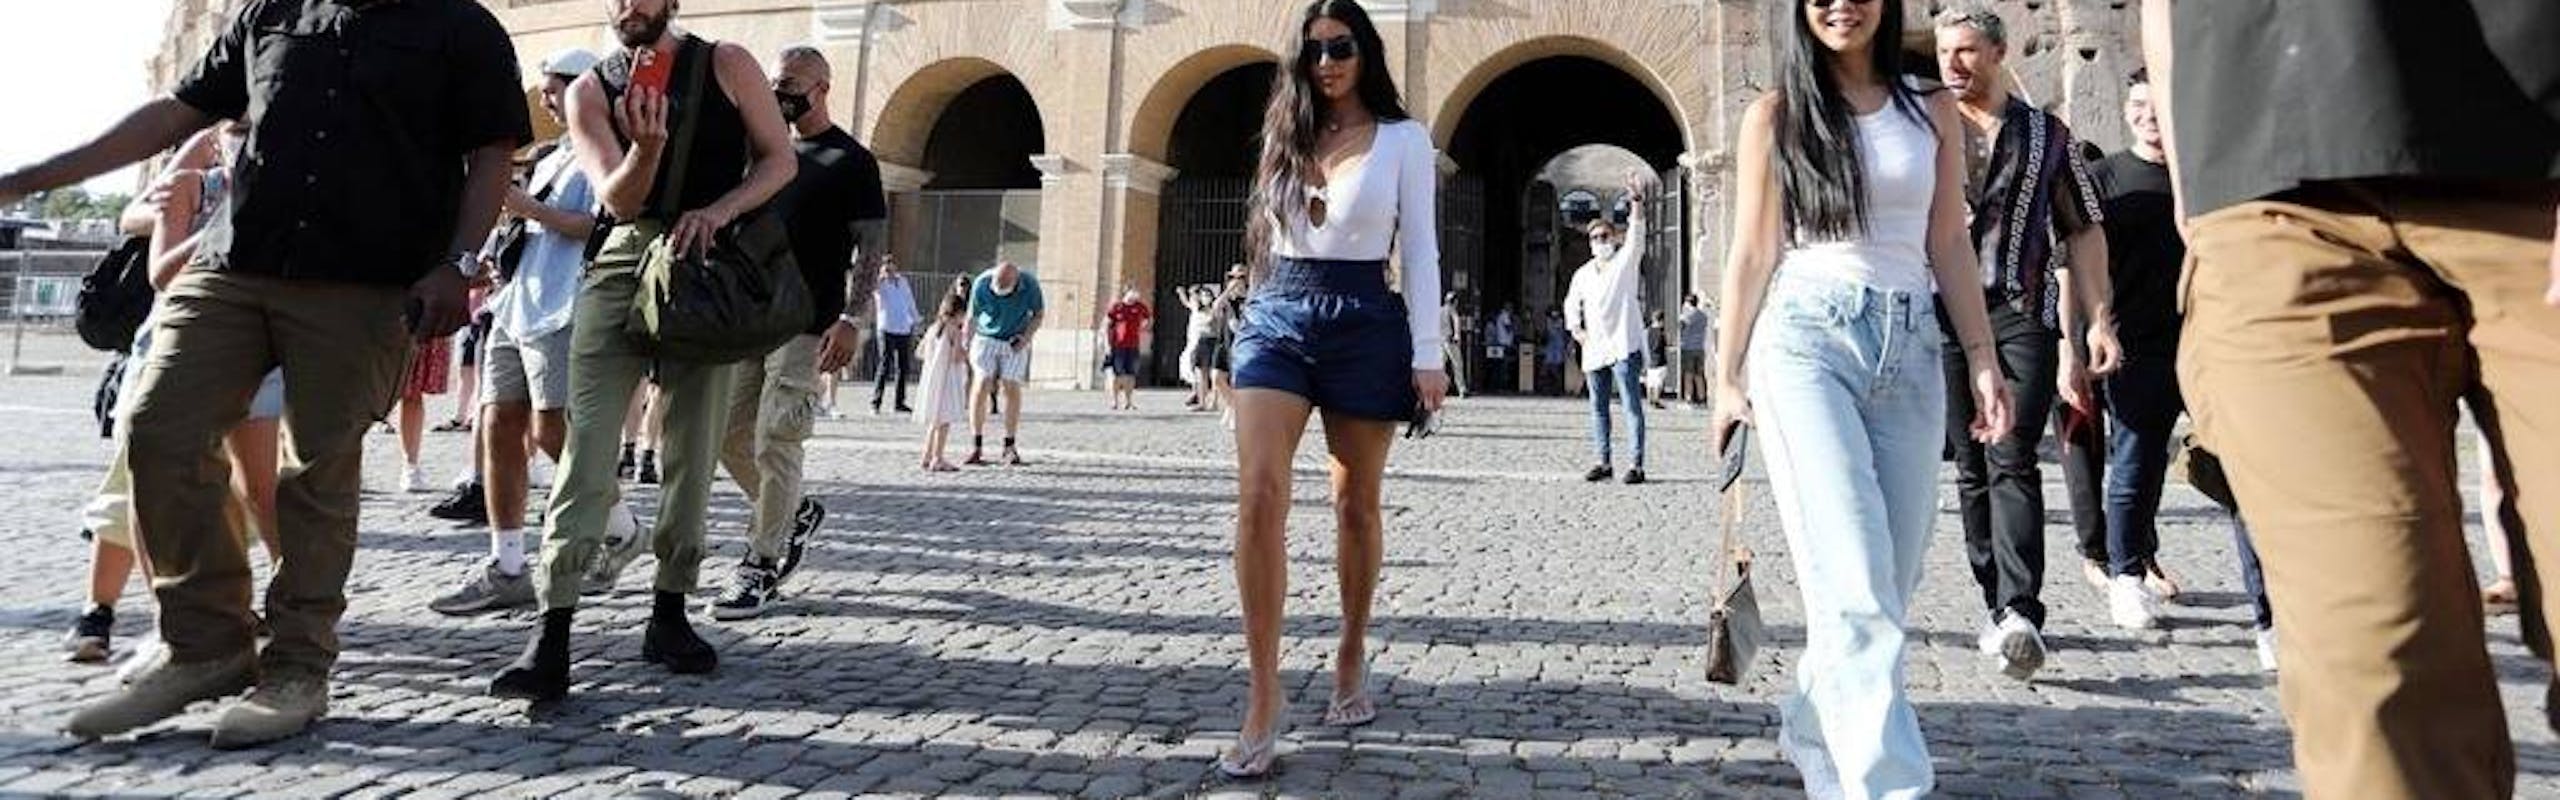 Kardashian visits the Colosseum. 